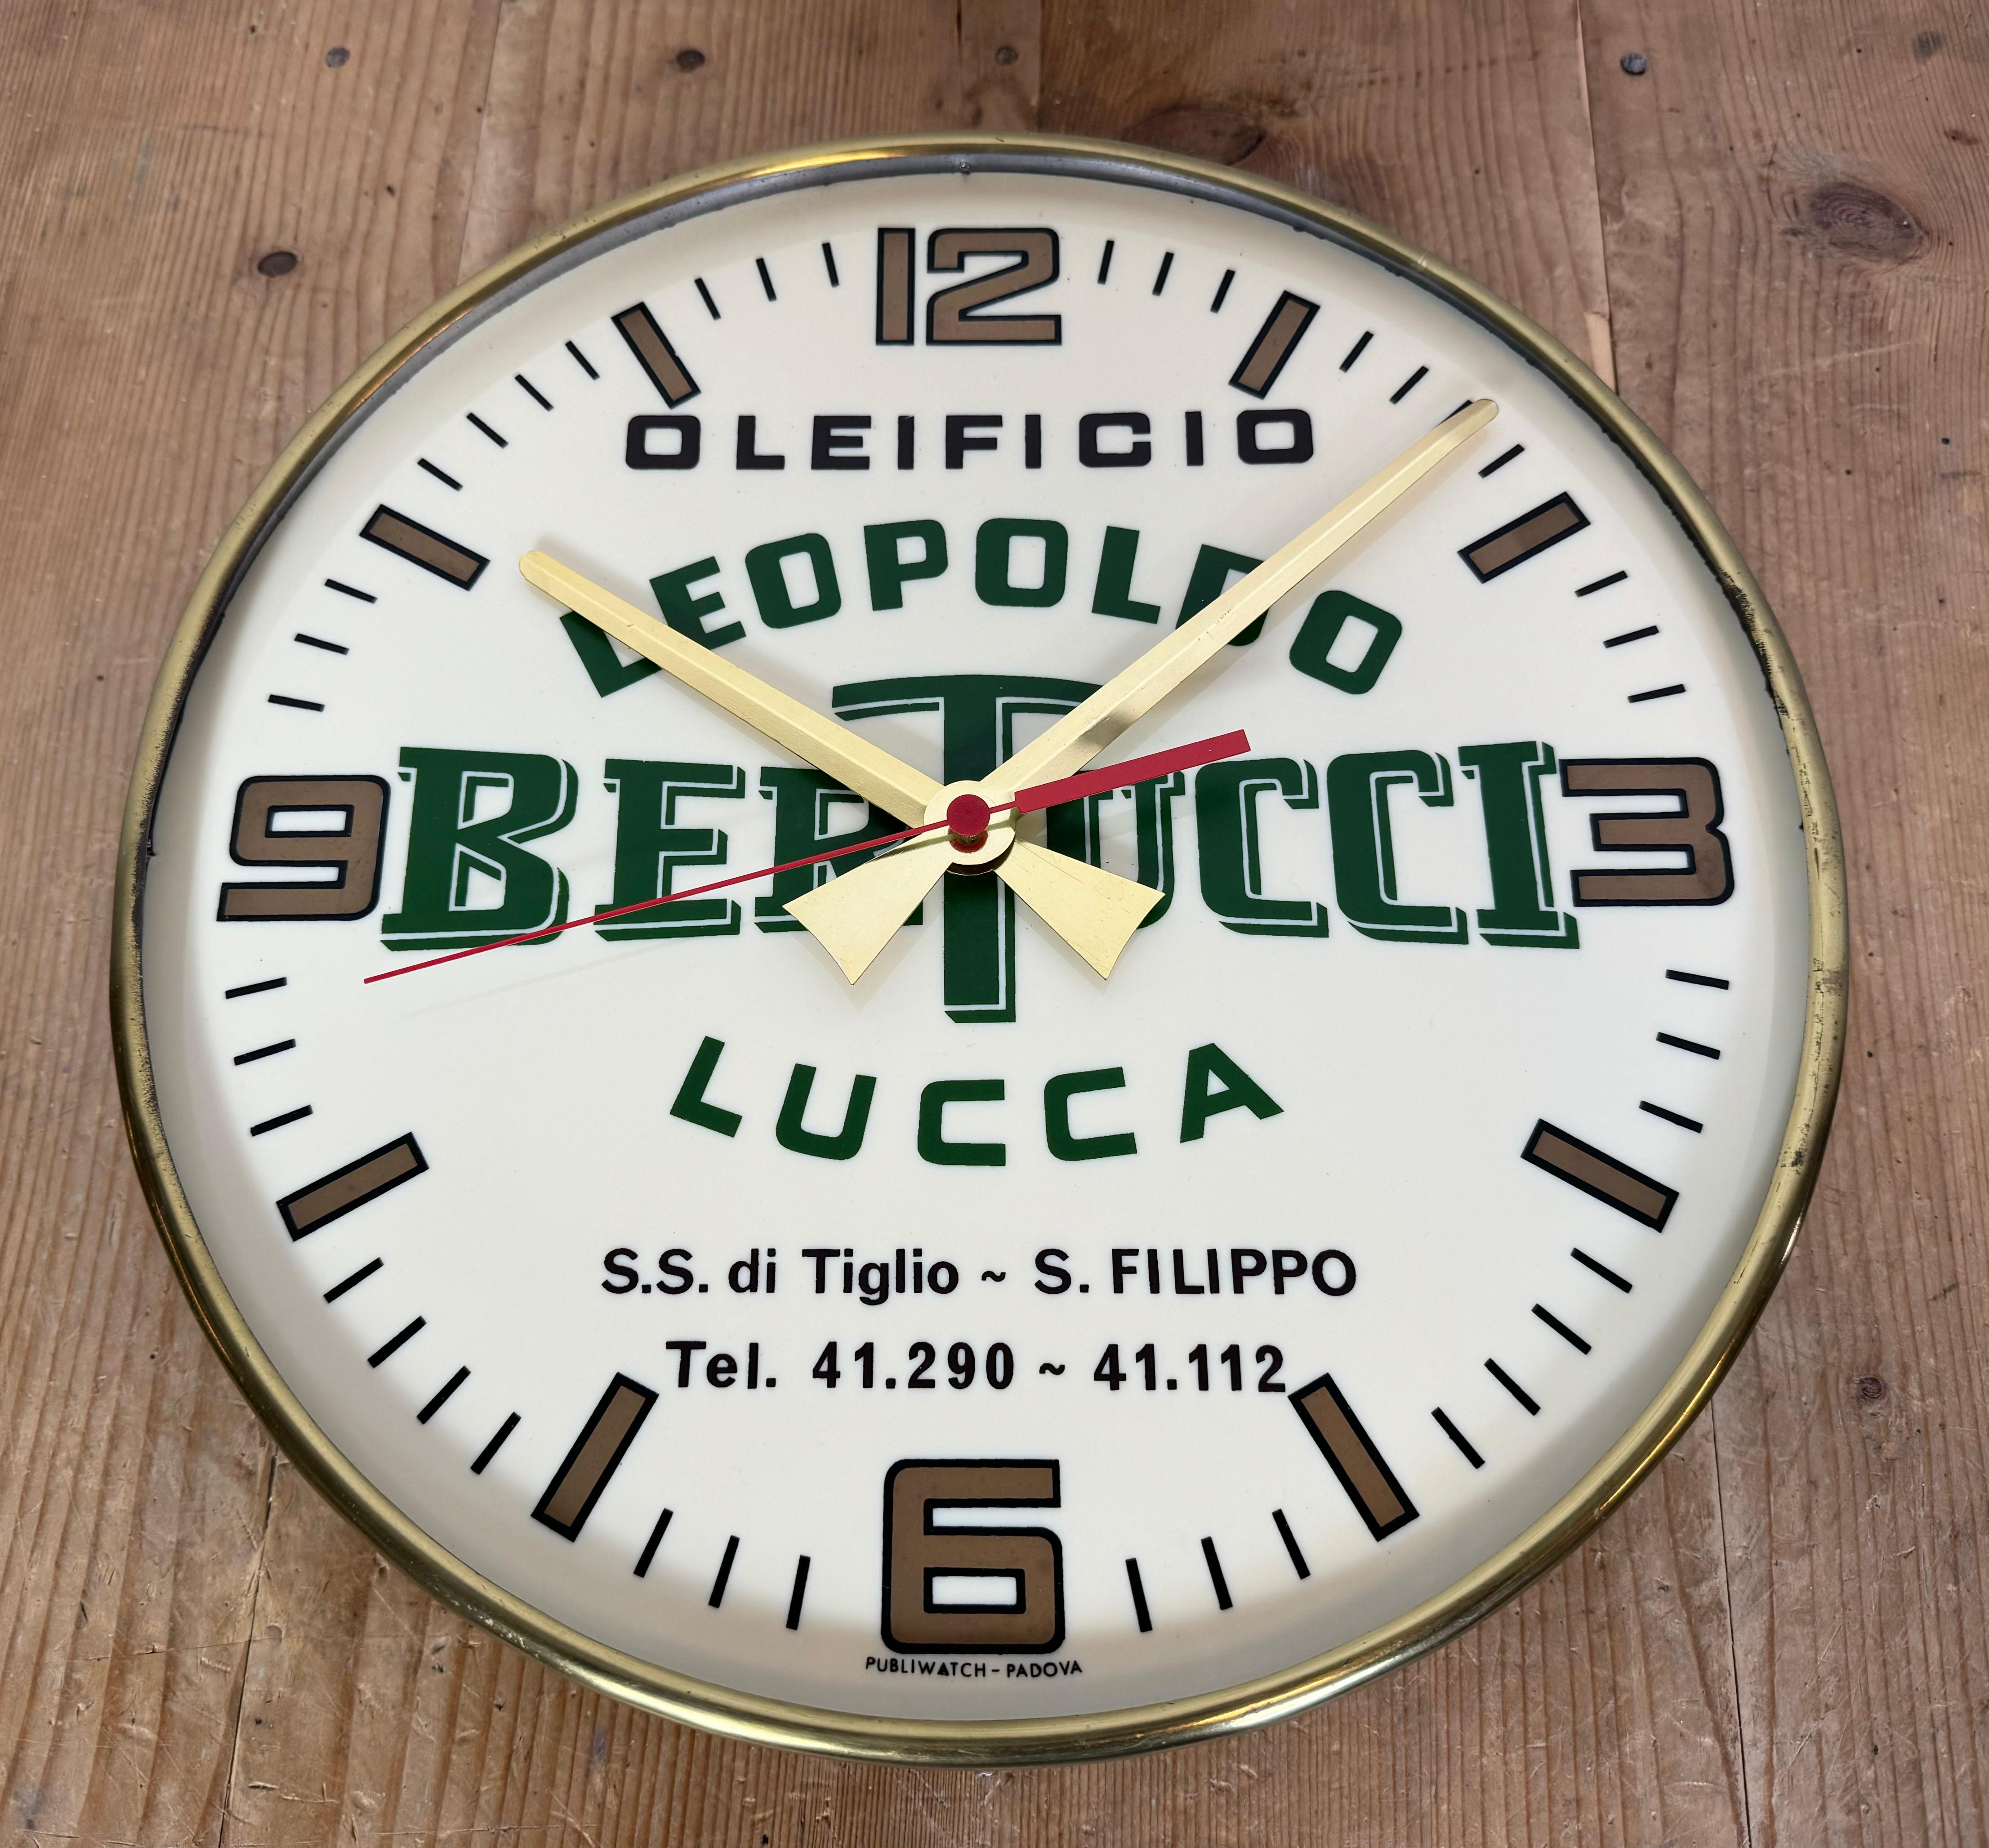 Vintage Italian Advertising Wall Clock, 1970s 4